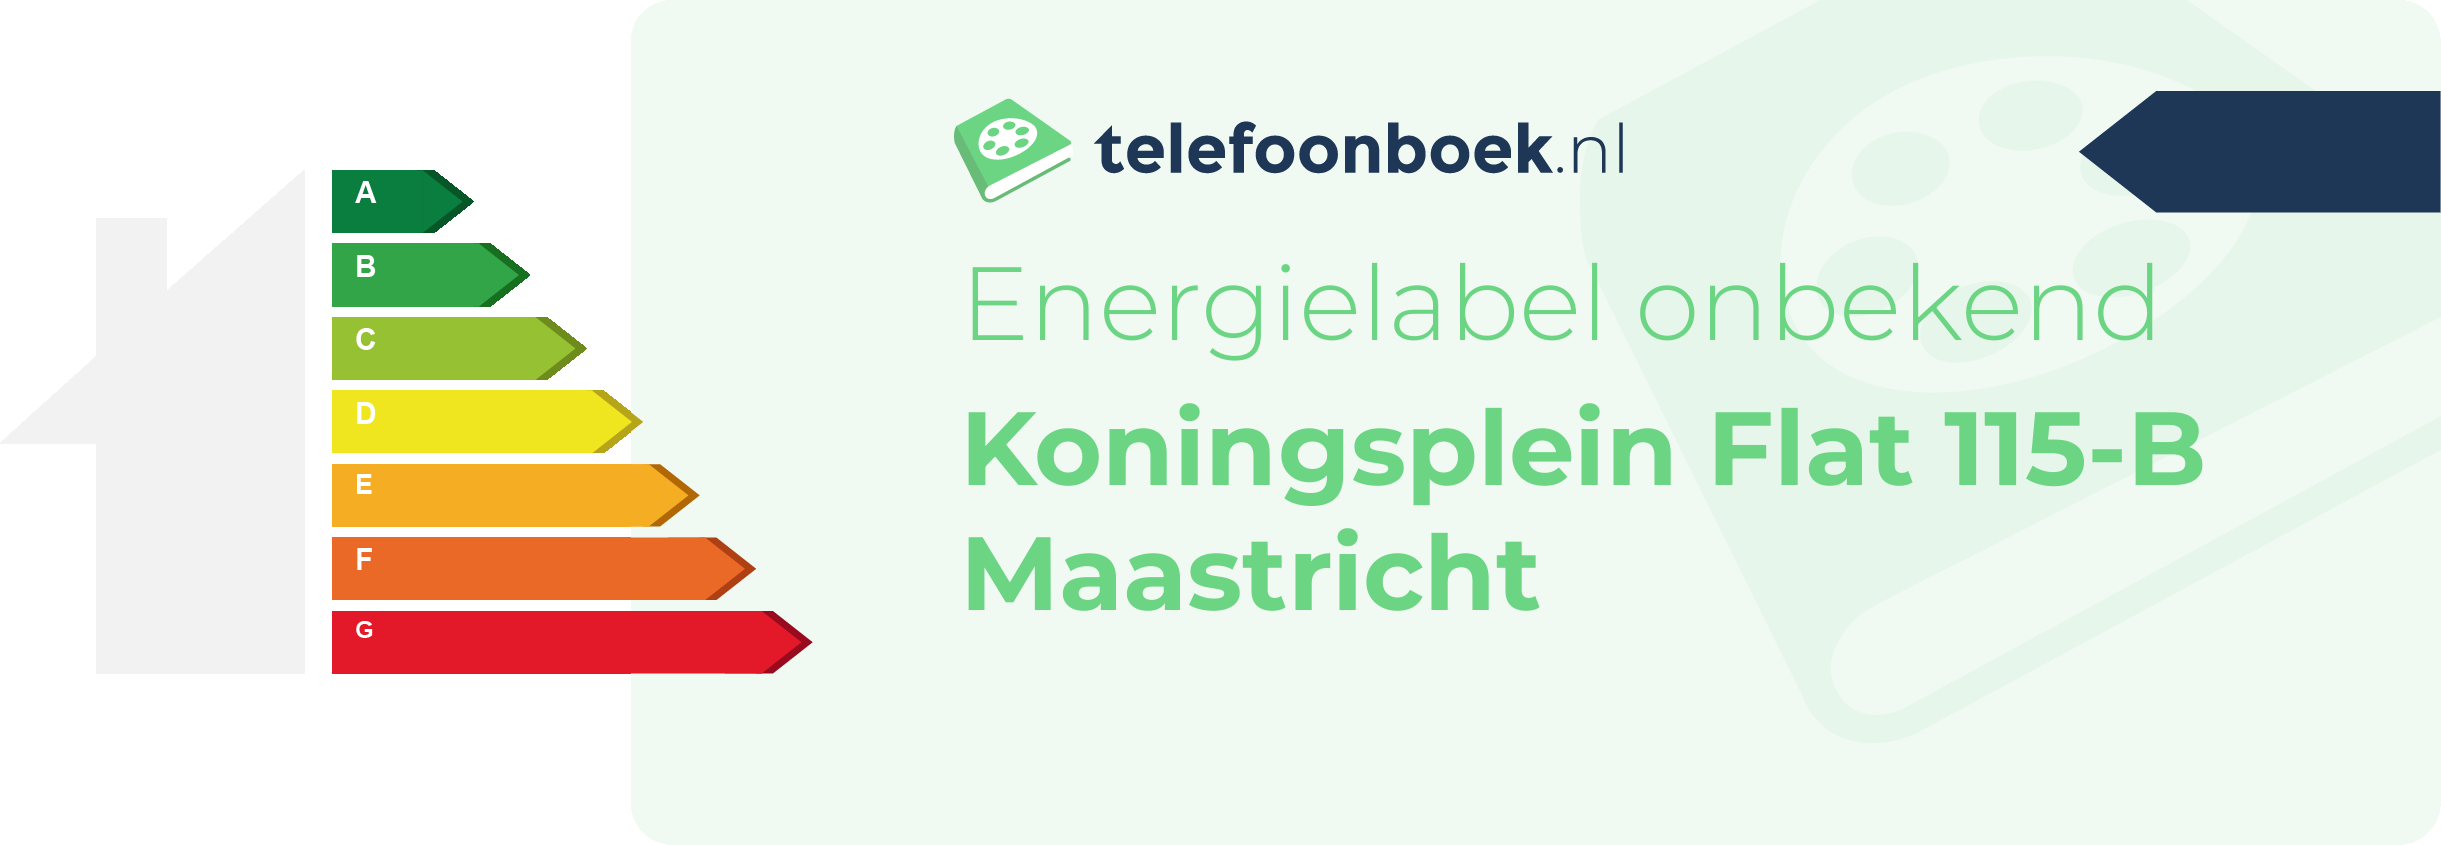 Energielabel Koningsplein Flat 115-B Maastricht